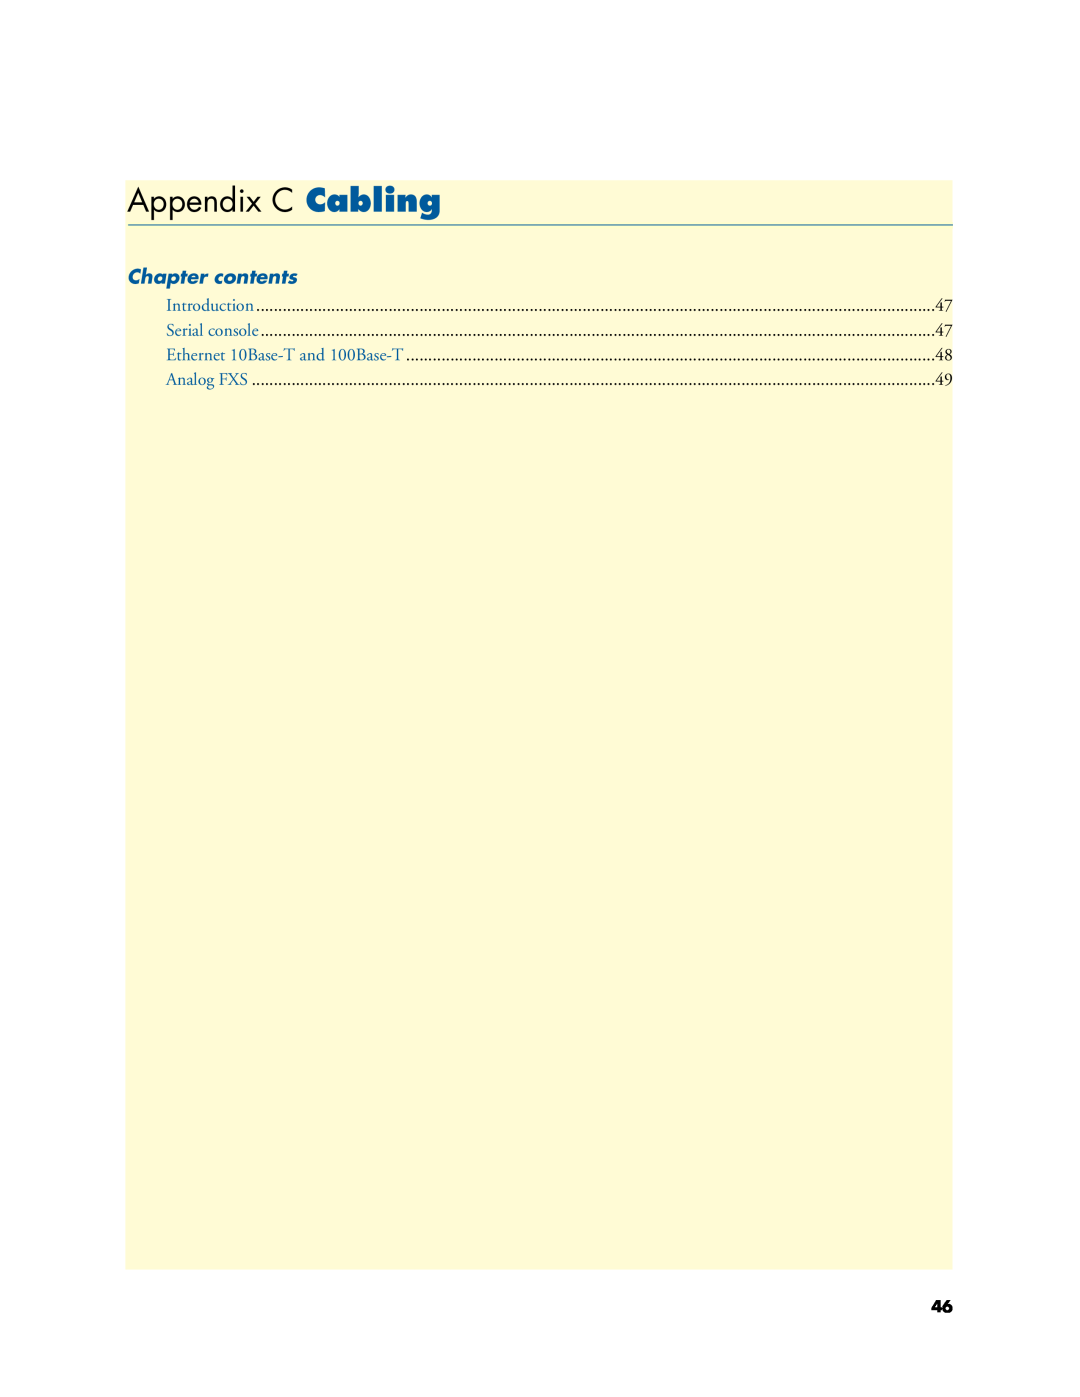 Patton electronic 2294, 2292 manual Appendix C Cabling, Chapter contents 